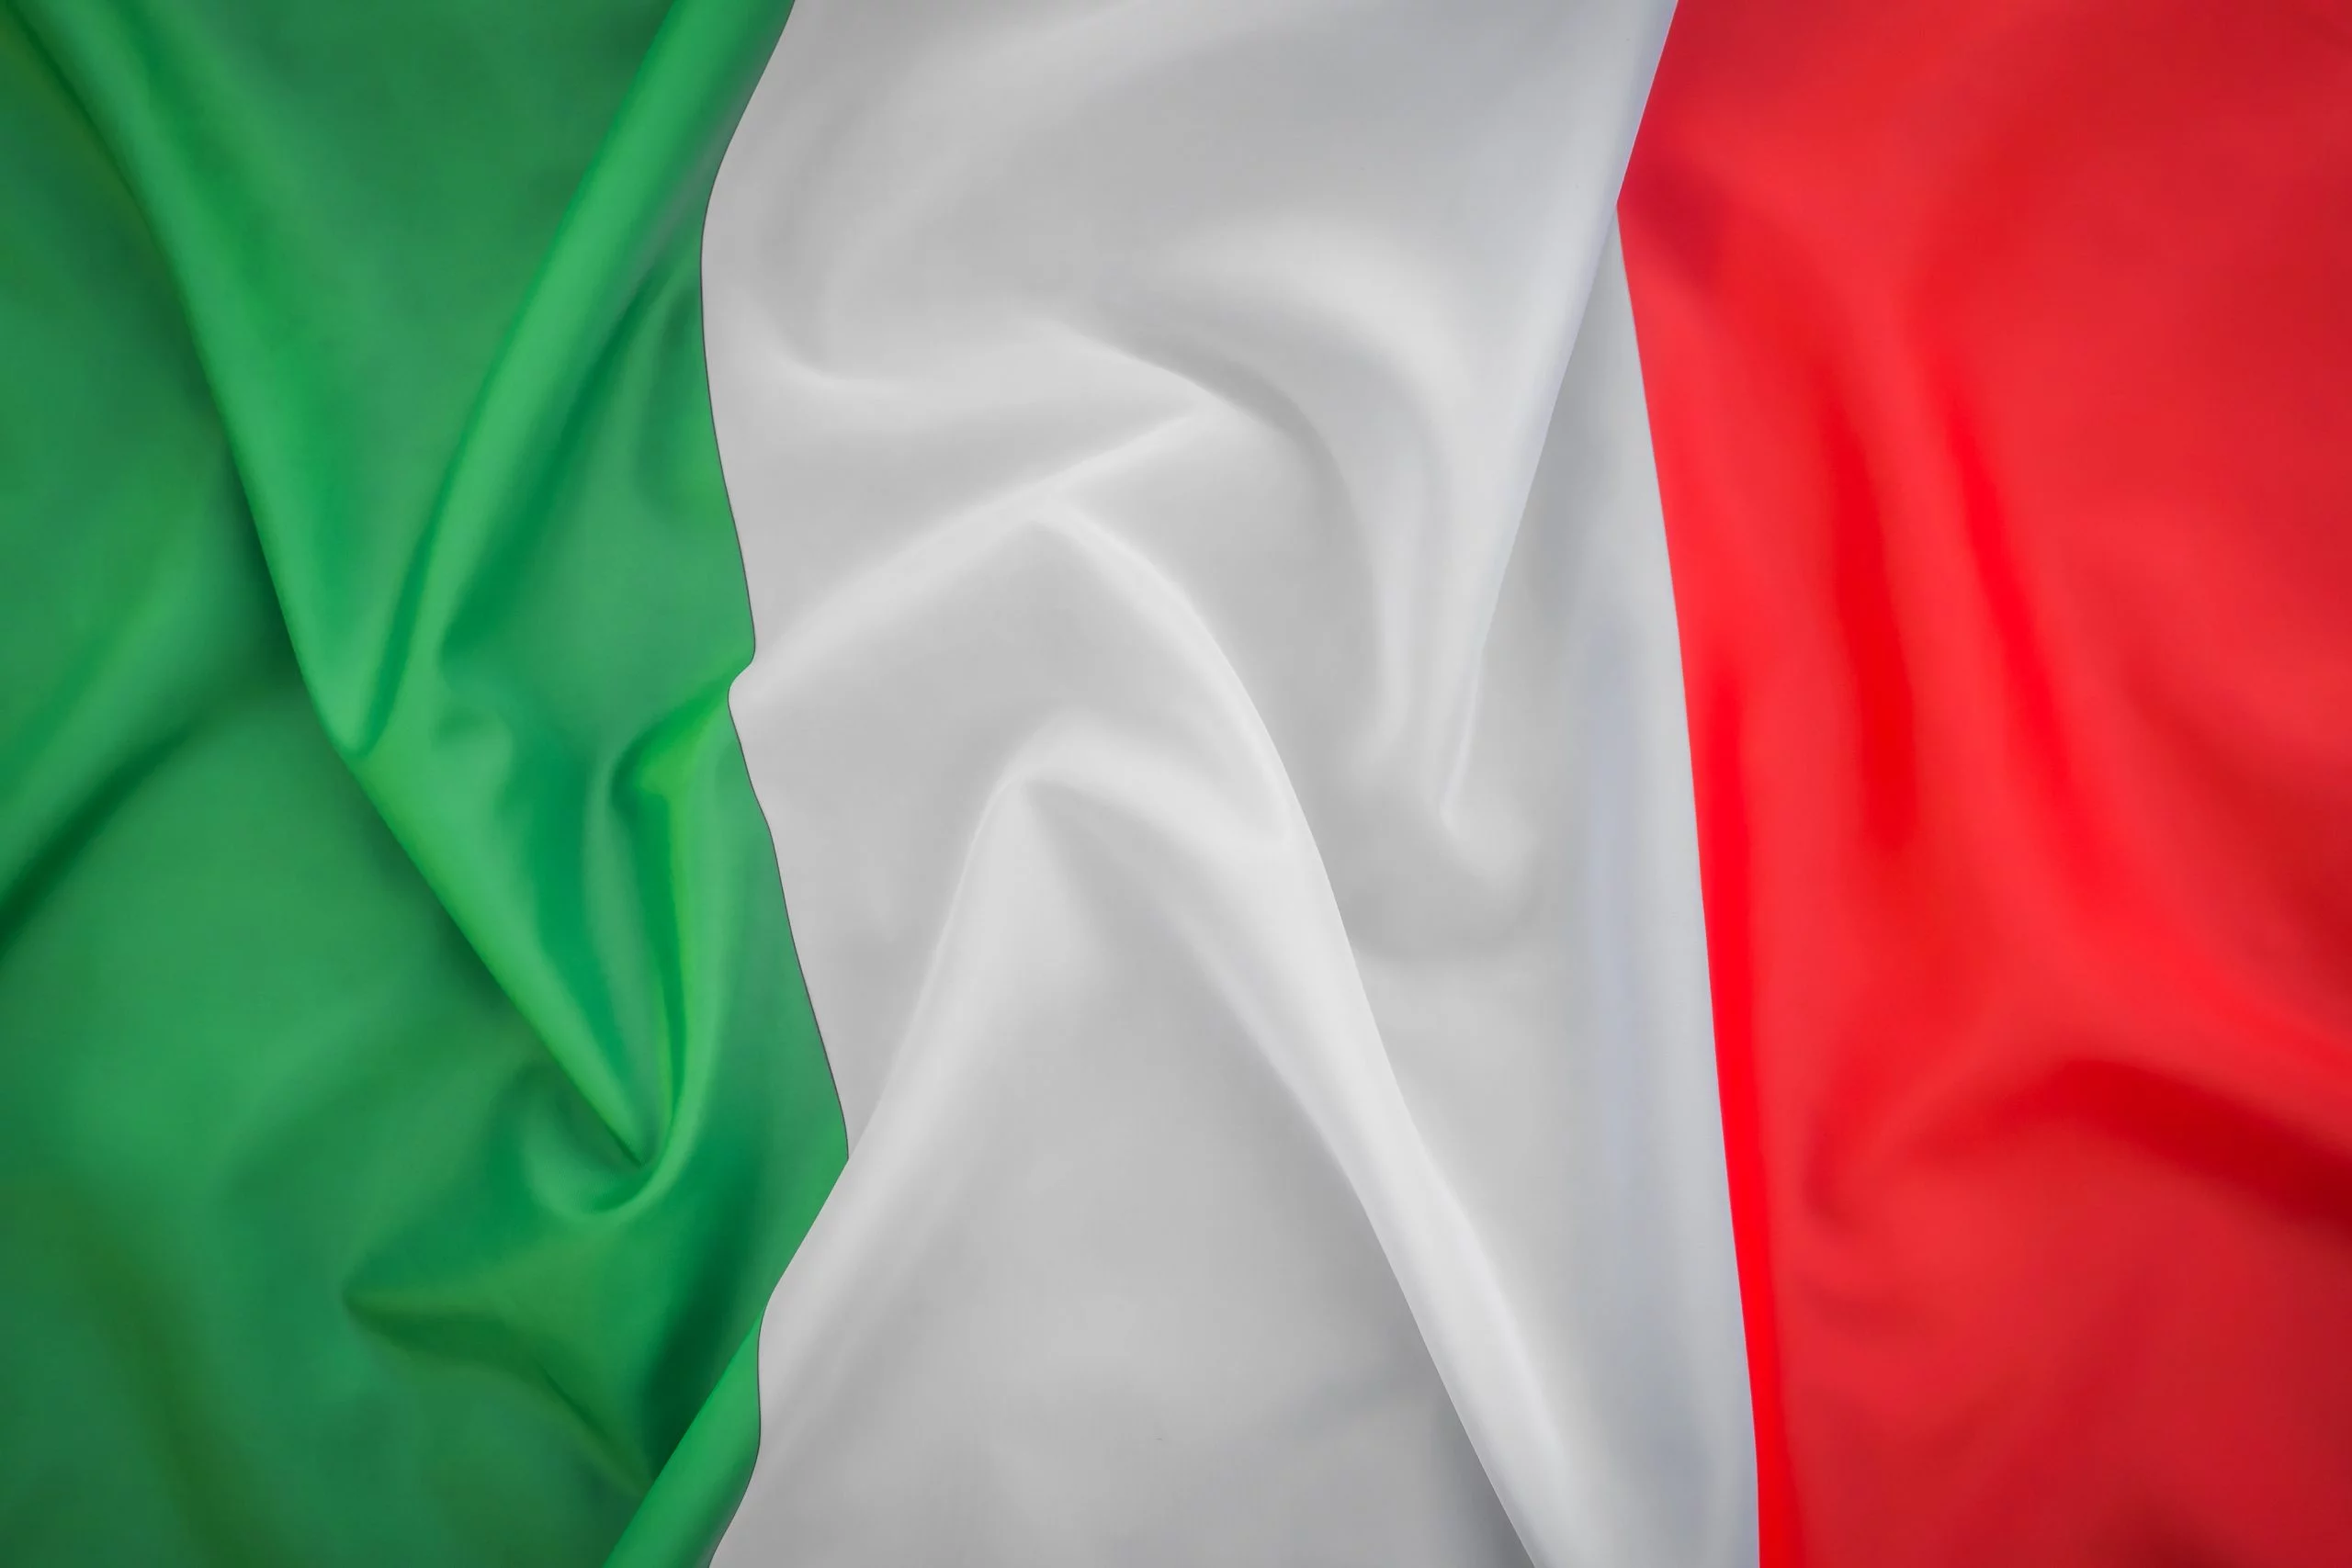 bandeira da italia